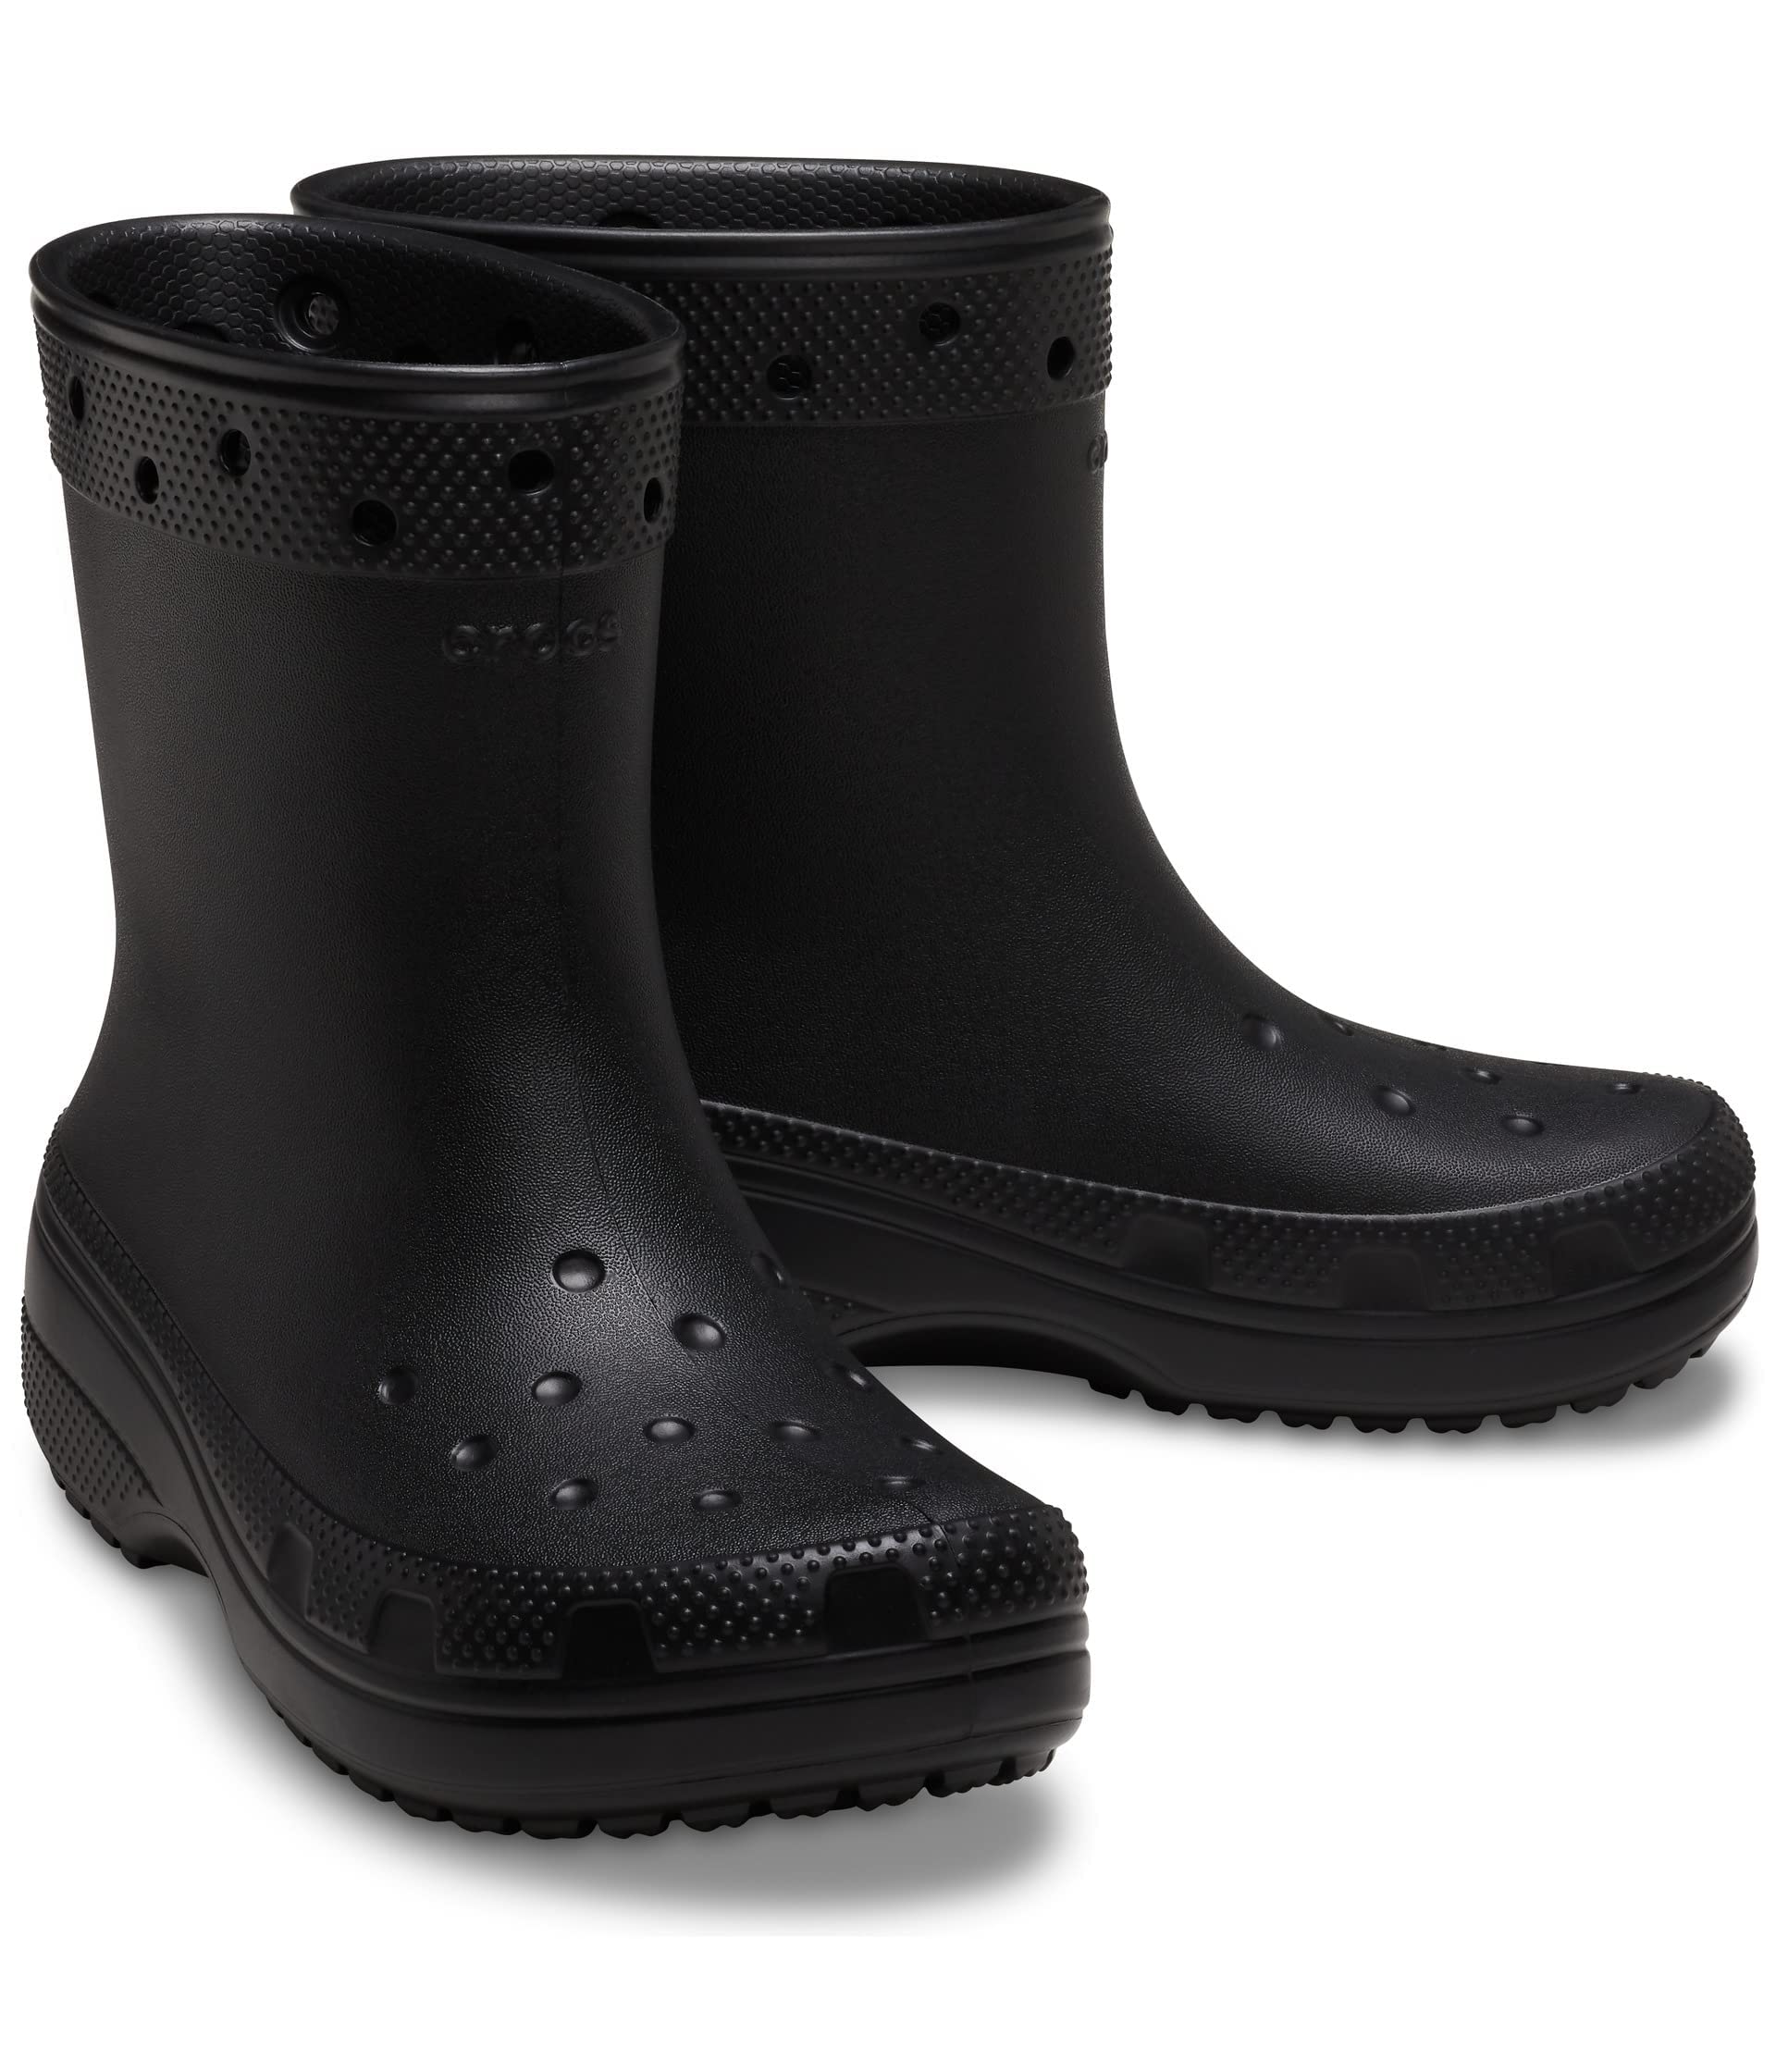 Crocs Unisex Classic Rain Boots, Black, 6 US Men